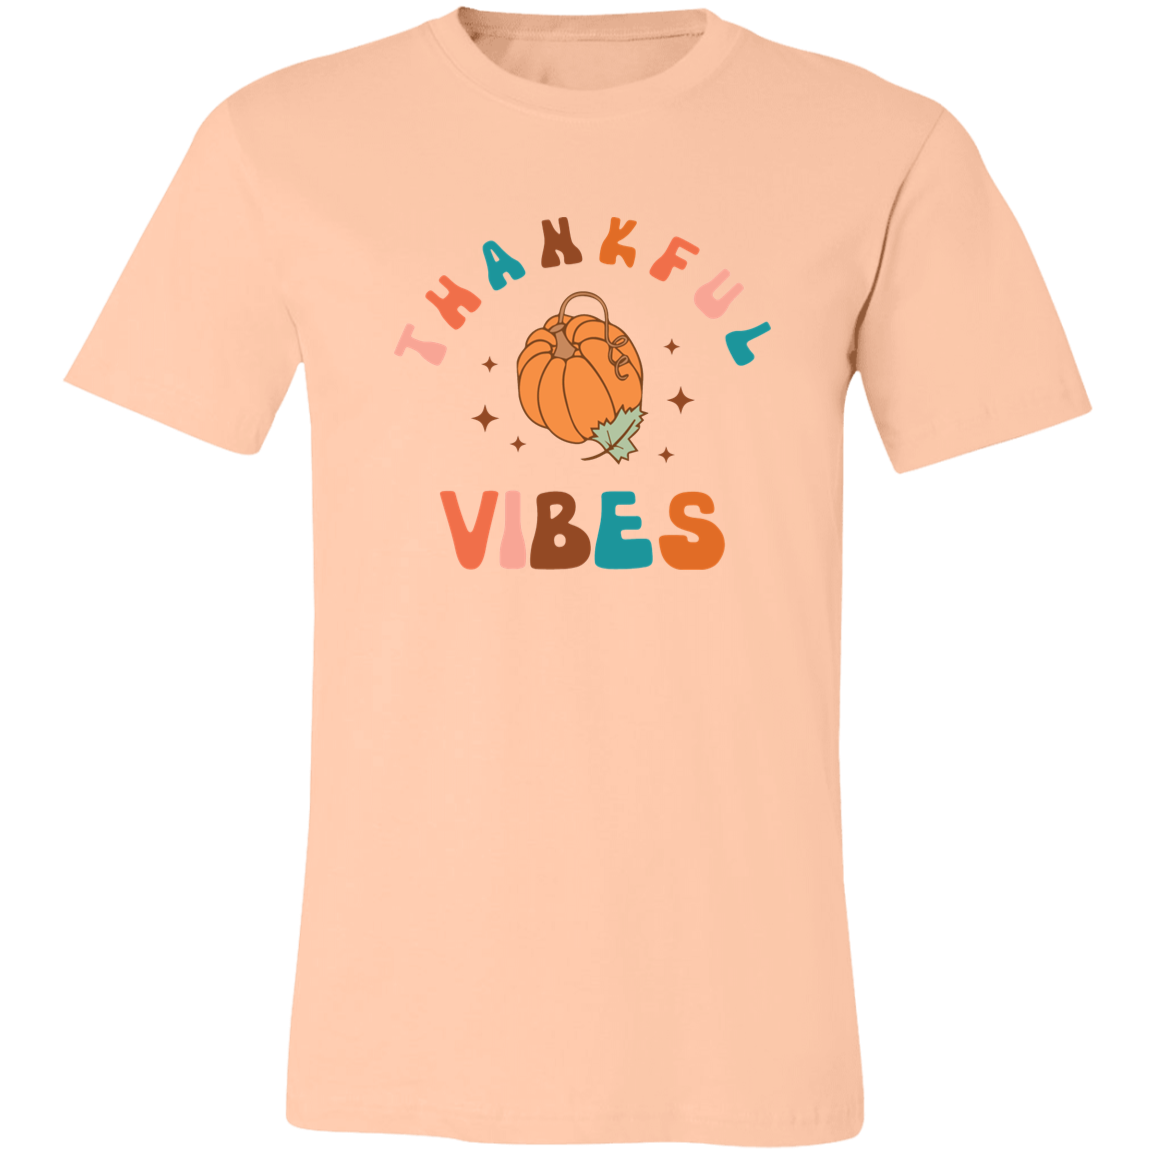 Thankful Vibes Shirt